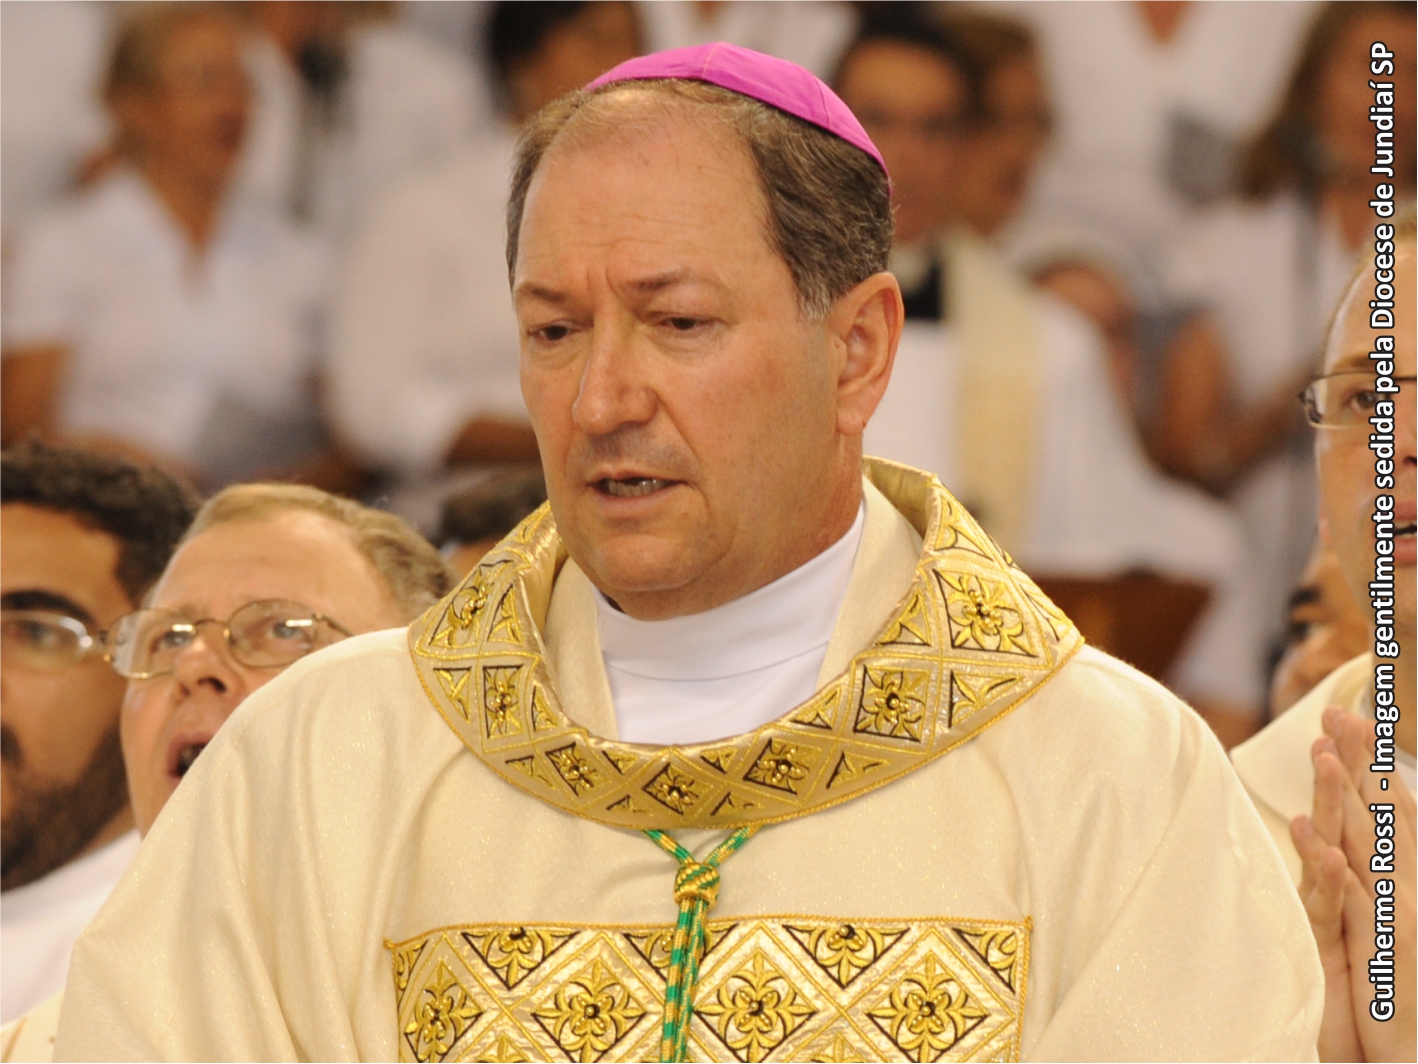 Papa Francisco nomeia bispo para a diocese de Colatina (ES)